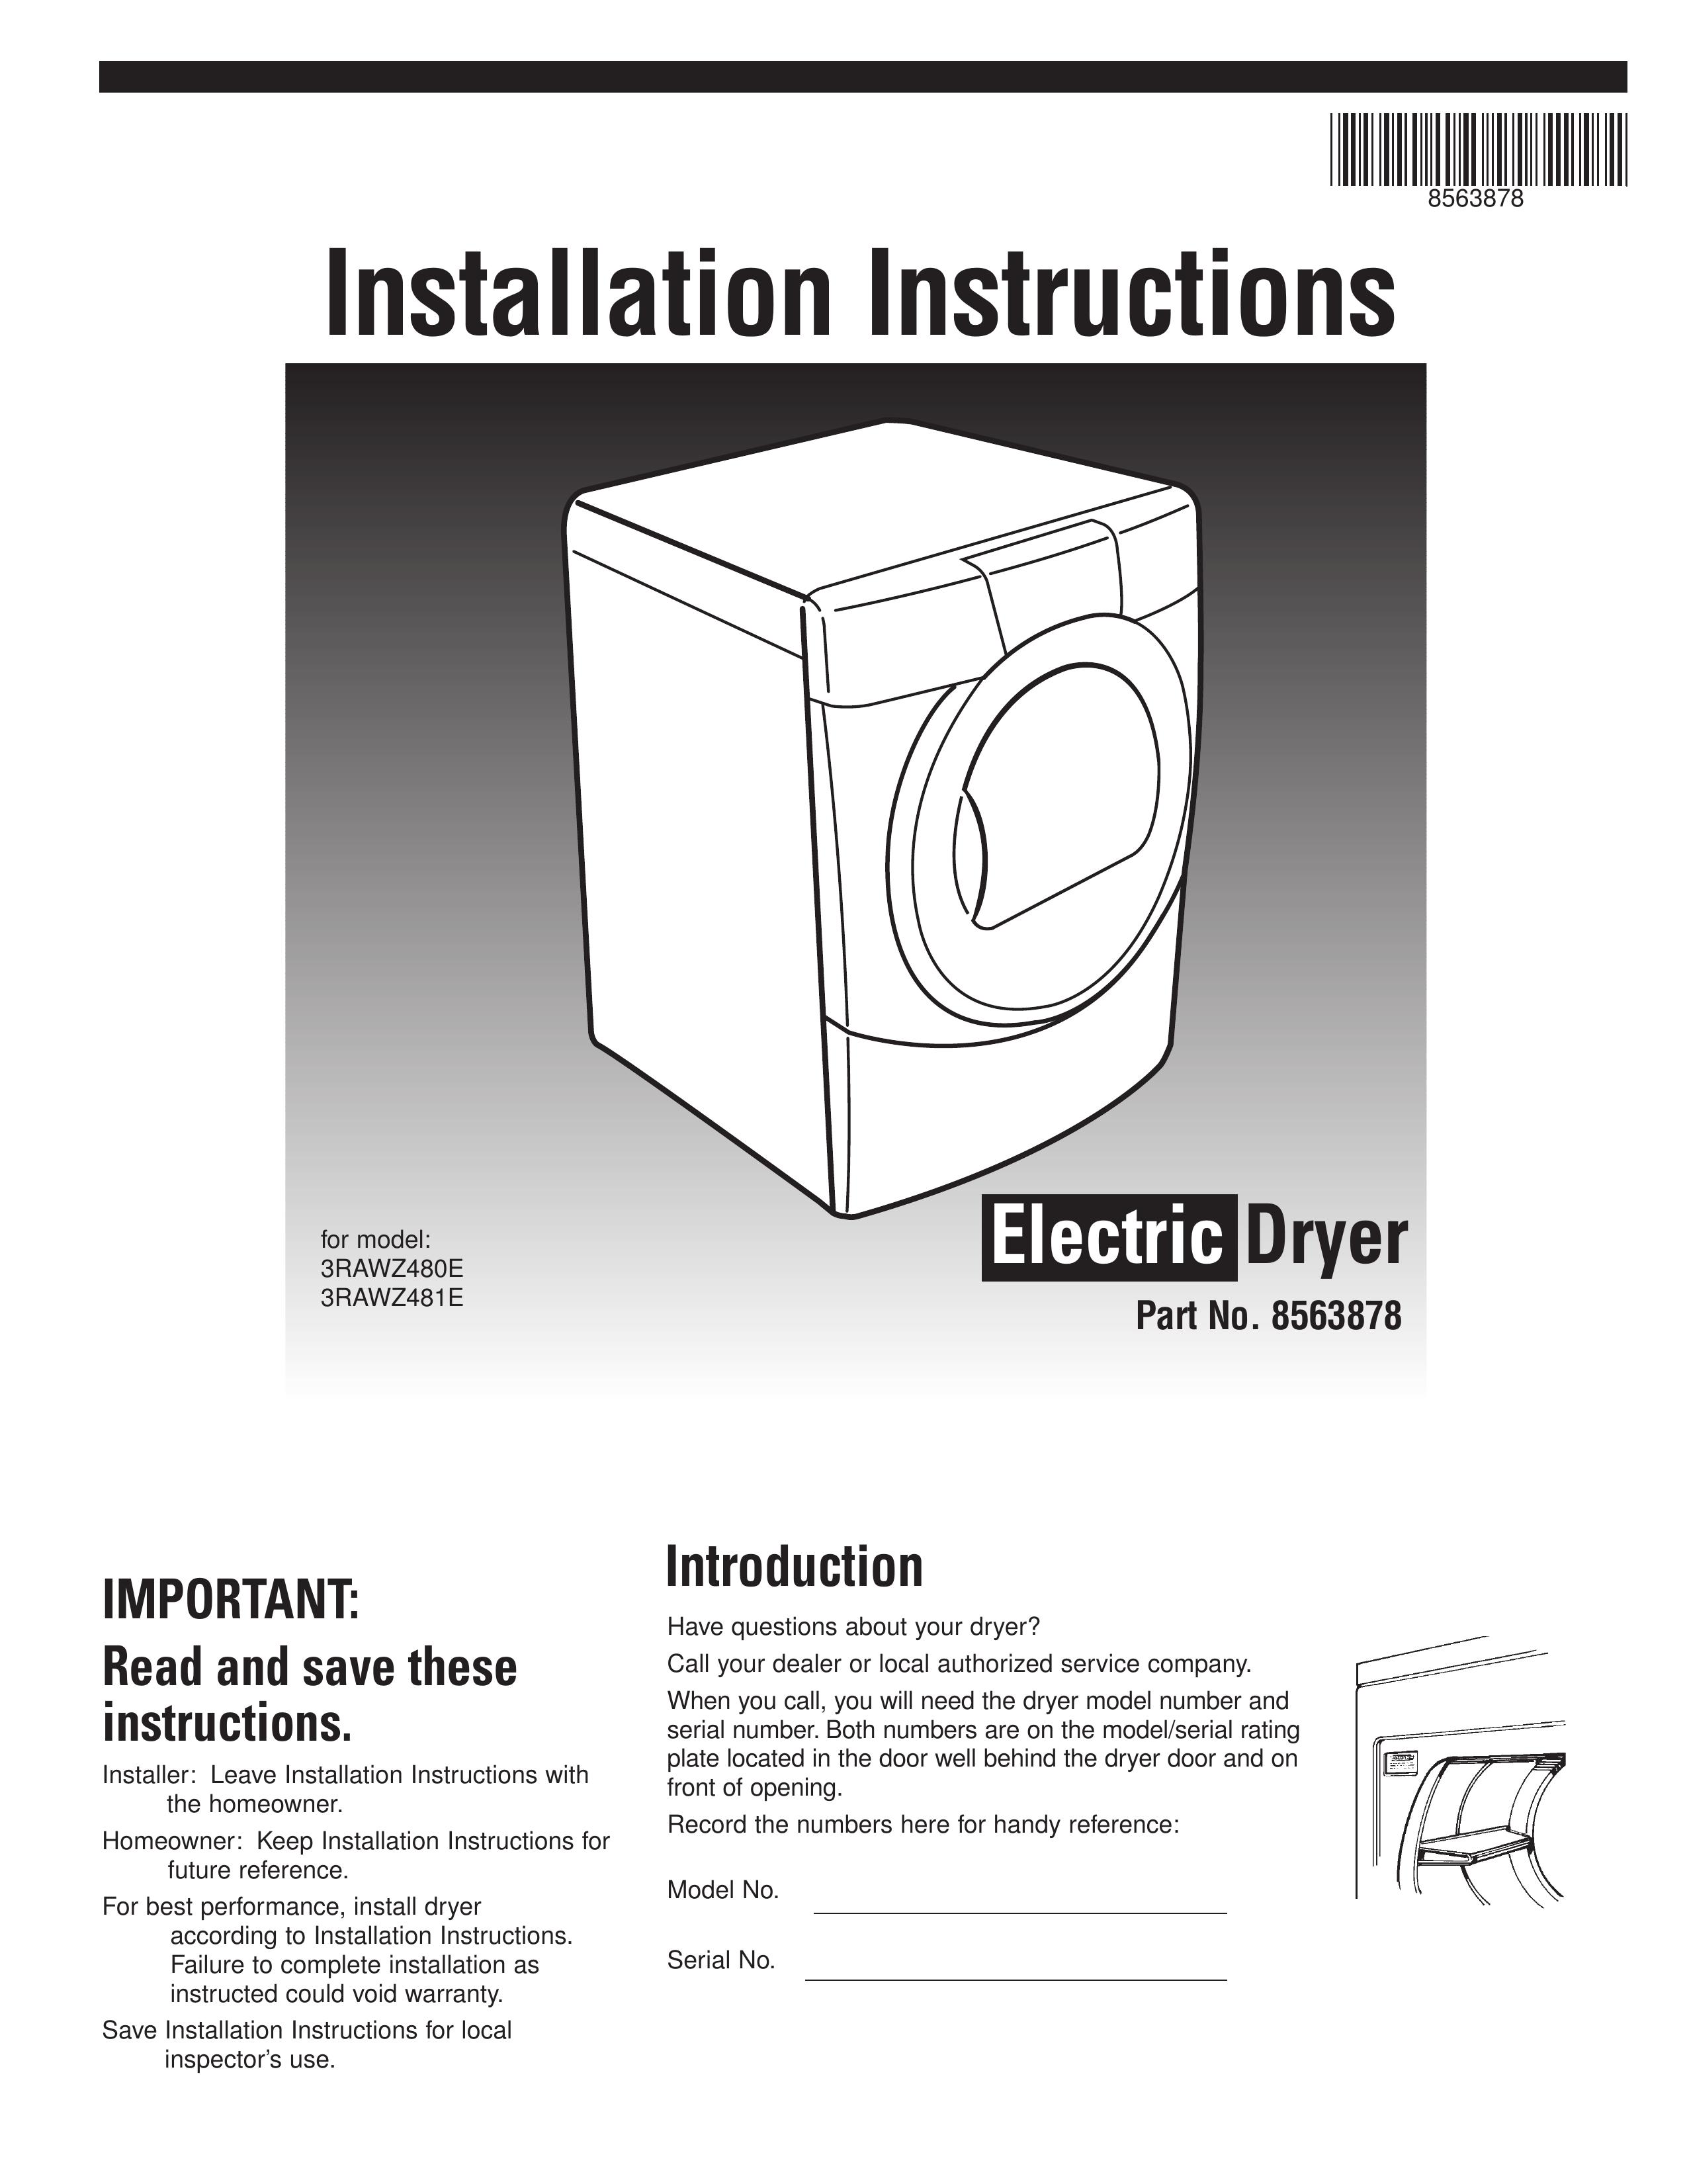 Whirlpool 3RAWZ480E Clothes Dryer User Manual